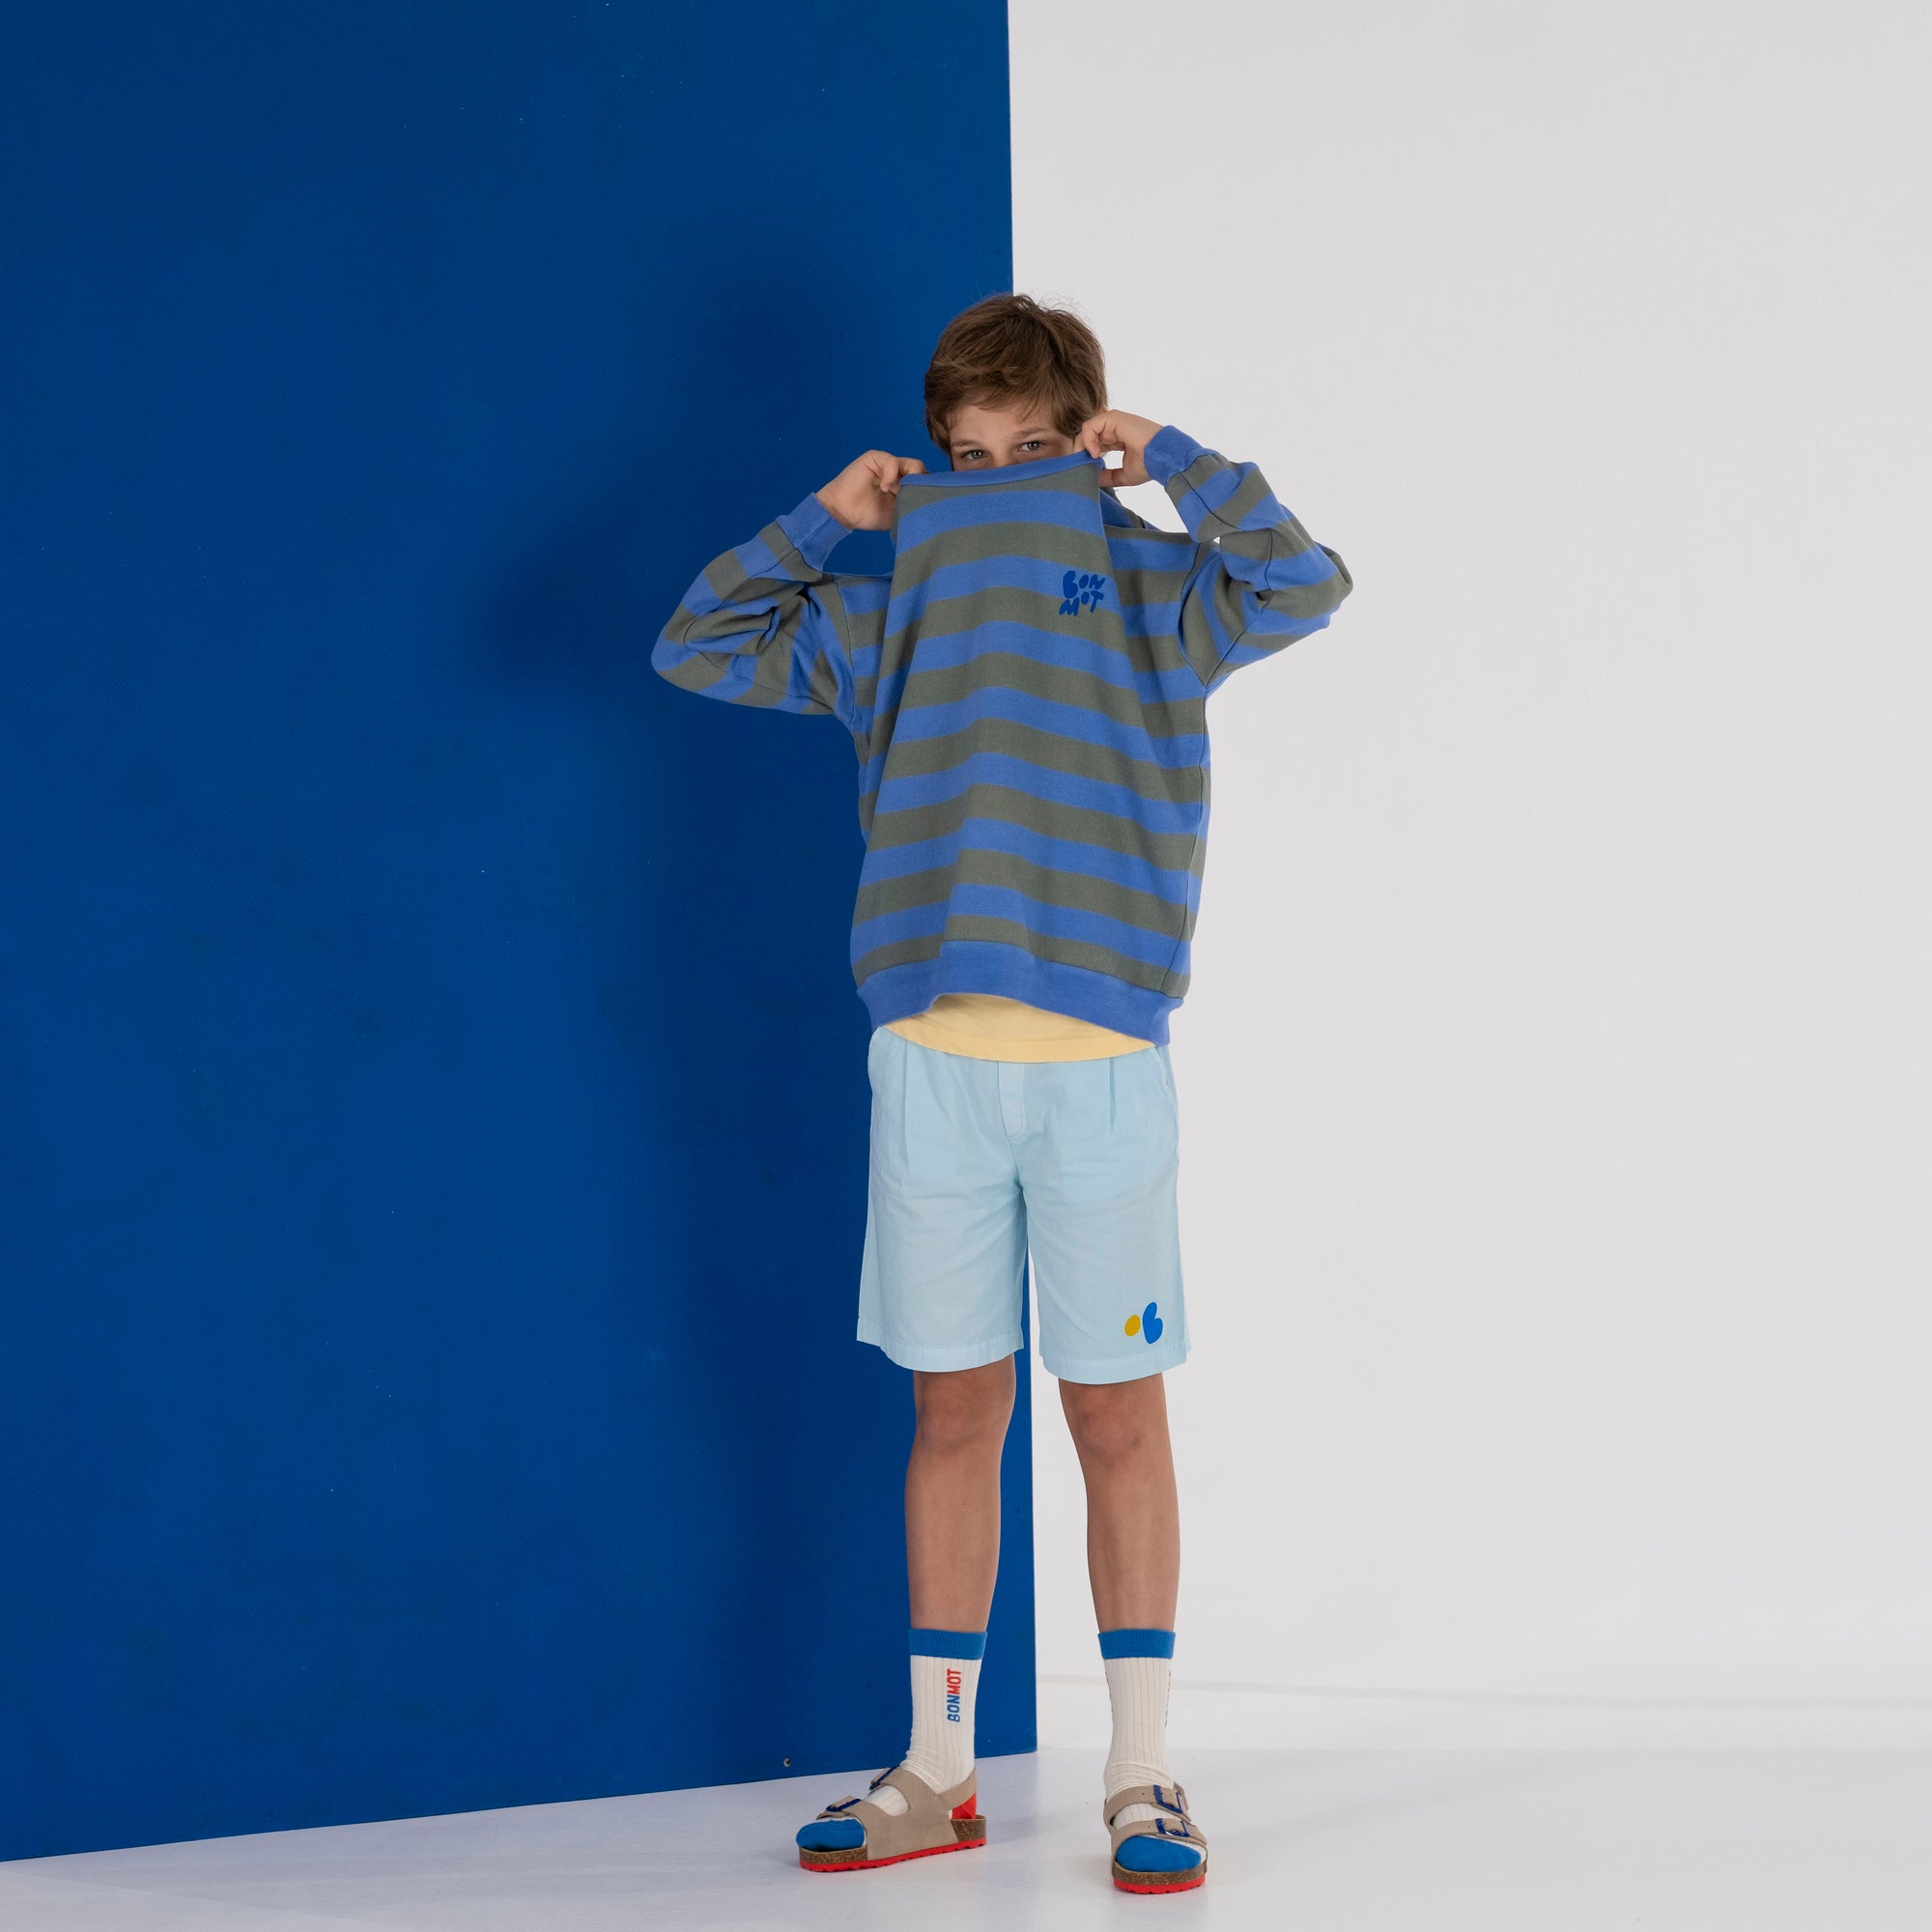 Boys & Girls Light Blue Cotton Shorts